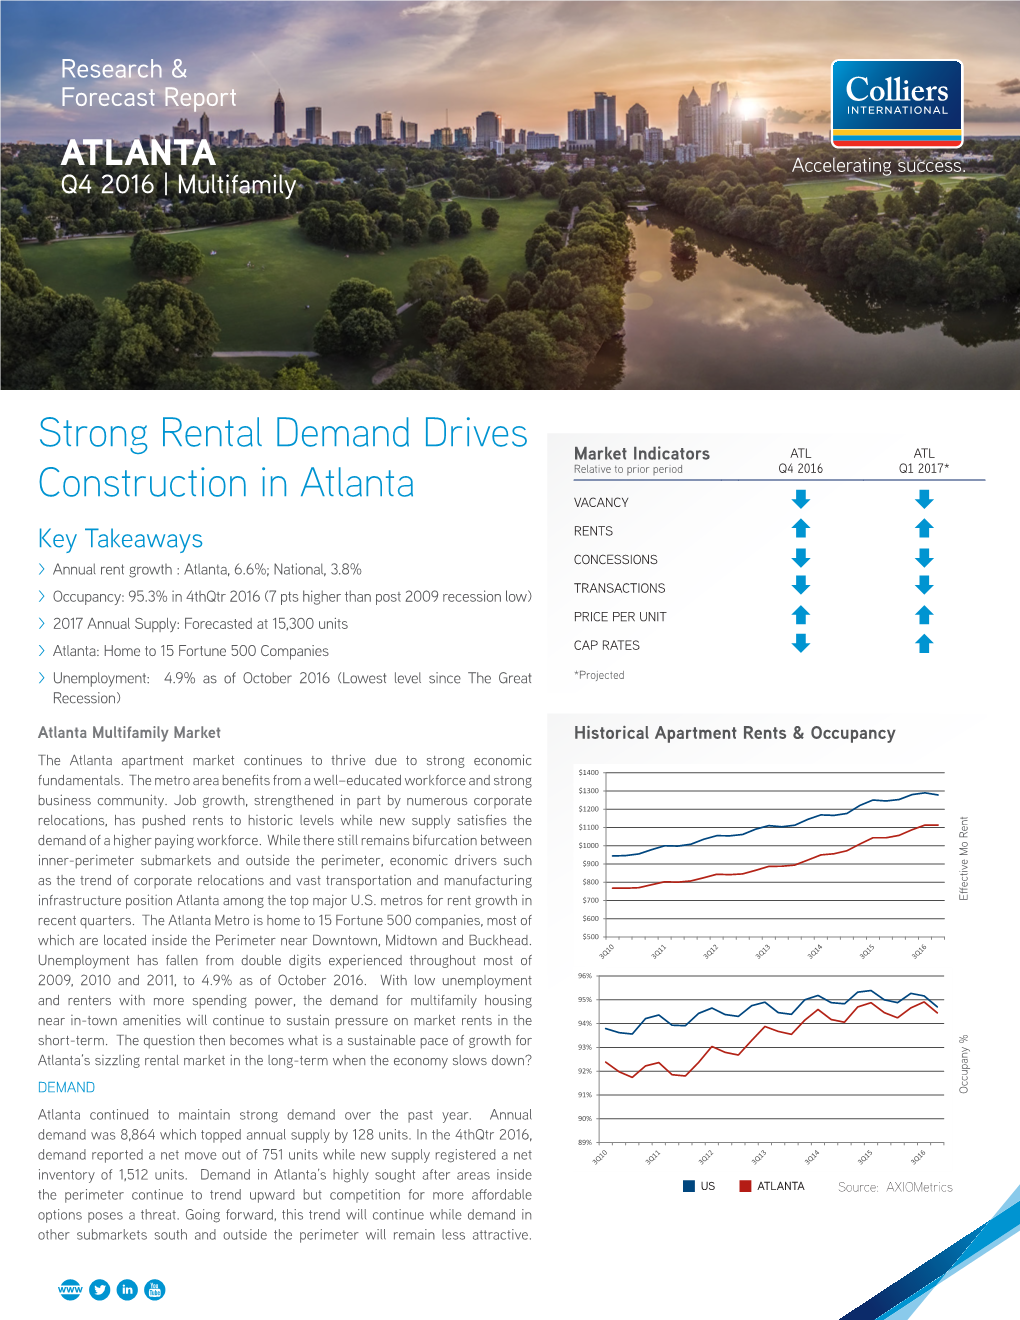 Strong Rental Demand Drives Construction in Atlanta